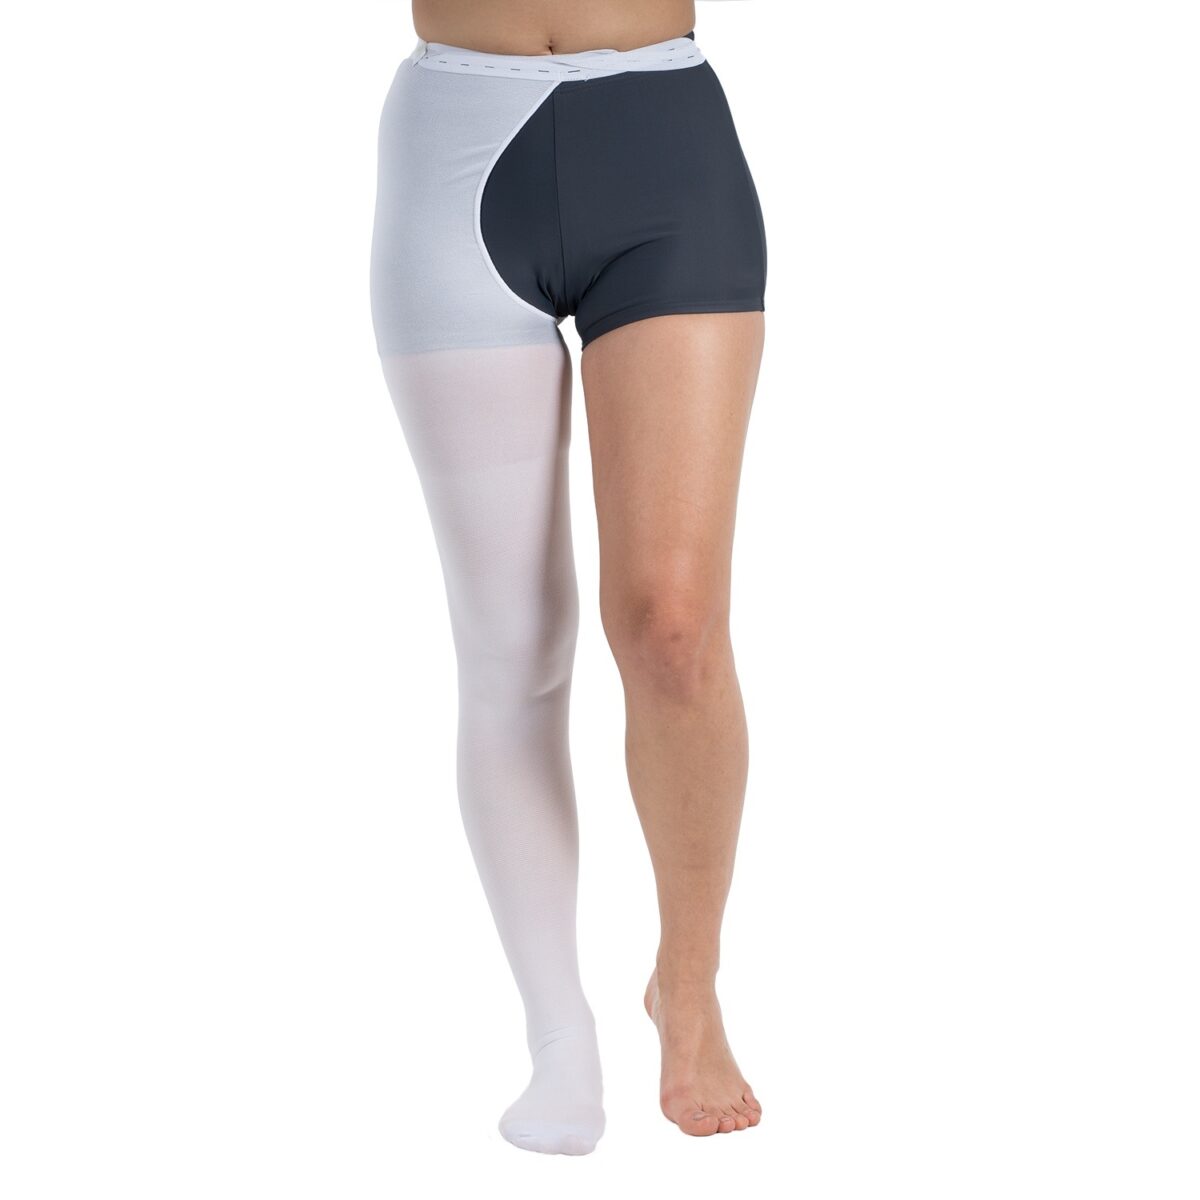 wingmed orthopedic equipments W1321 anti embolism stockings thigh high with waist belt pair 23